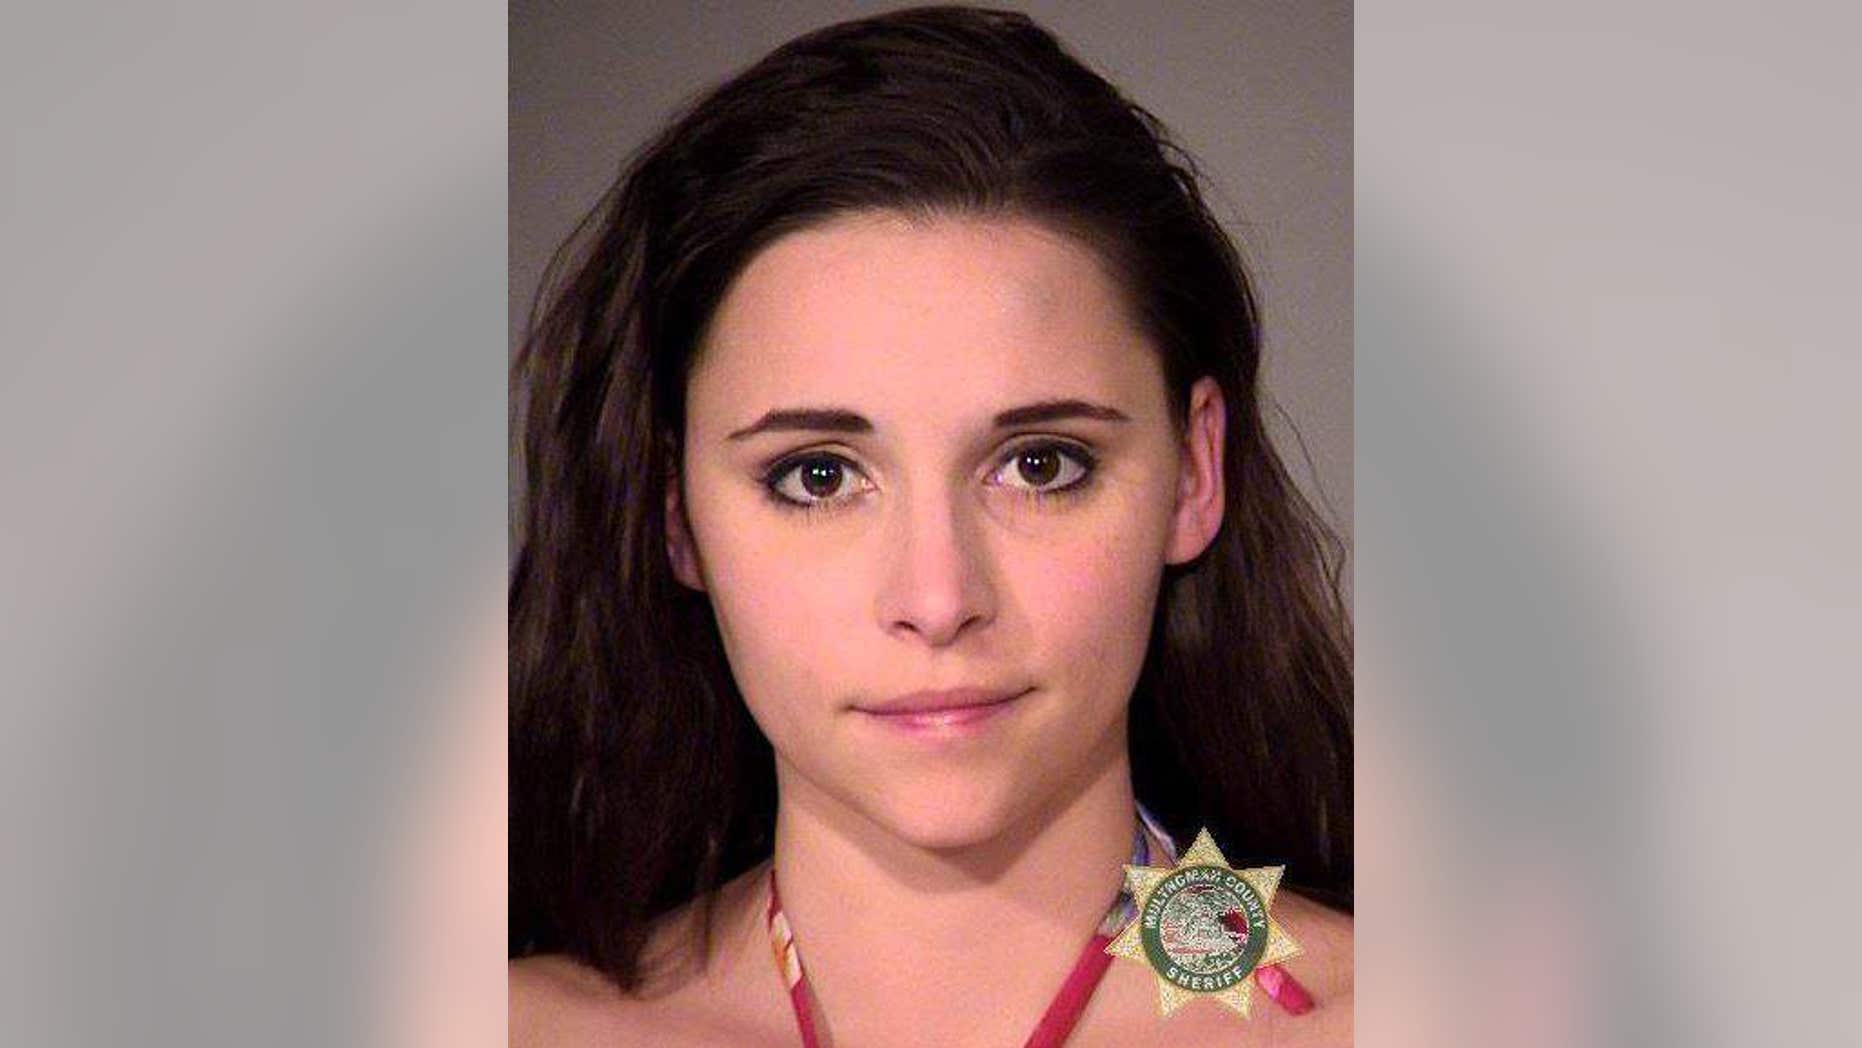 Woman Arrested For Groping Female Passenger While Flying Fox News 